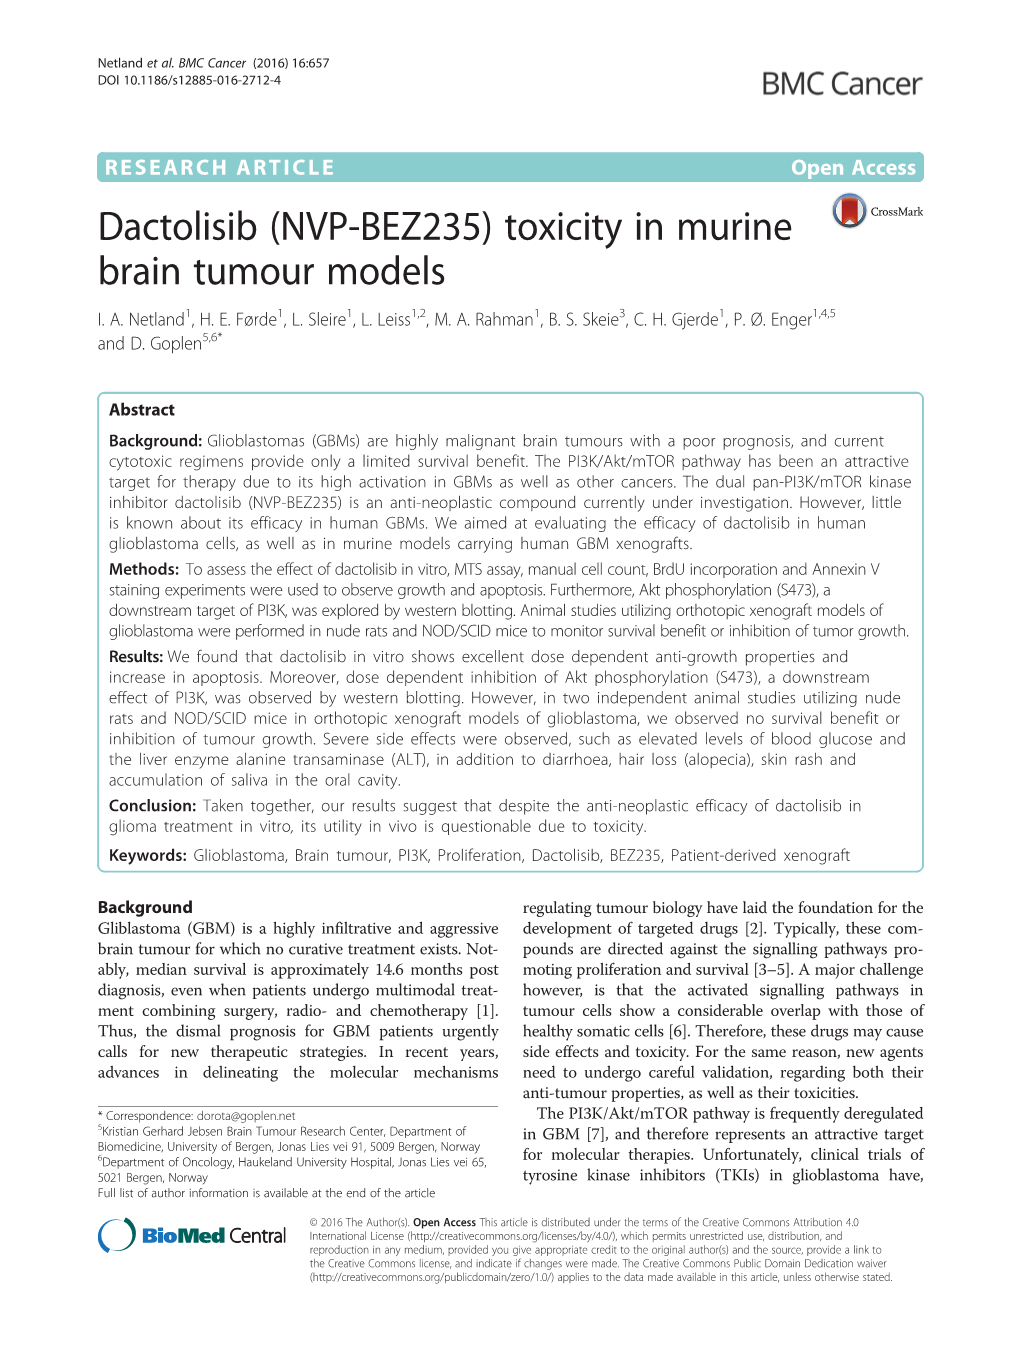 Dactolisib (NVP-BEZ235) Toxicity in Murine Brain Tumour Models I